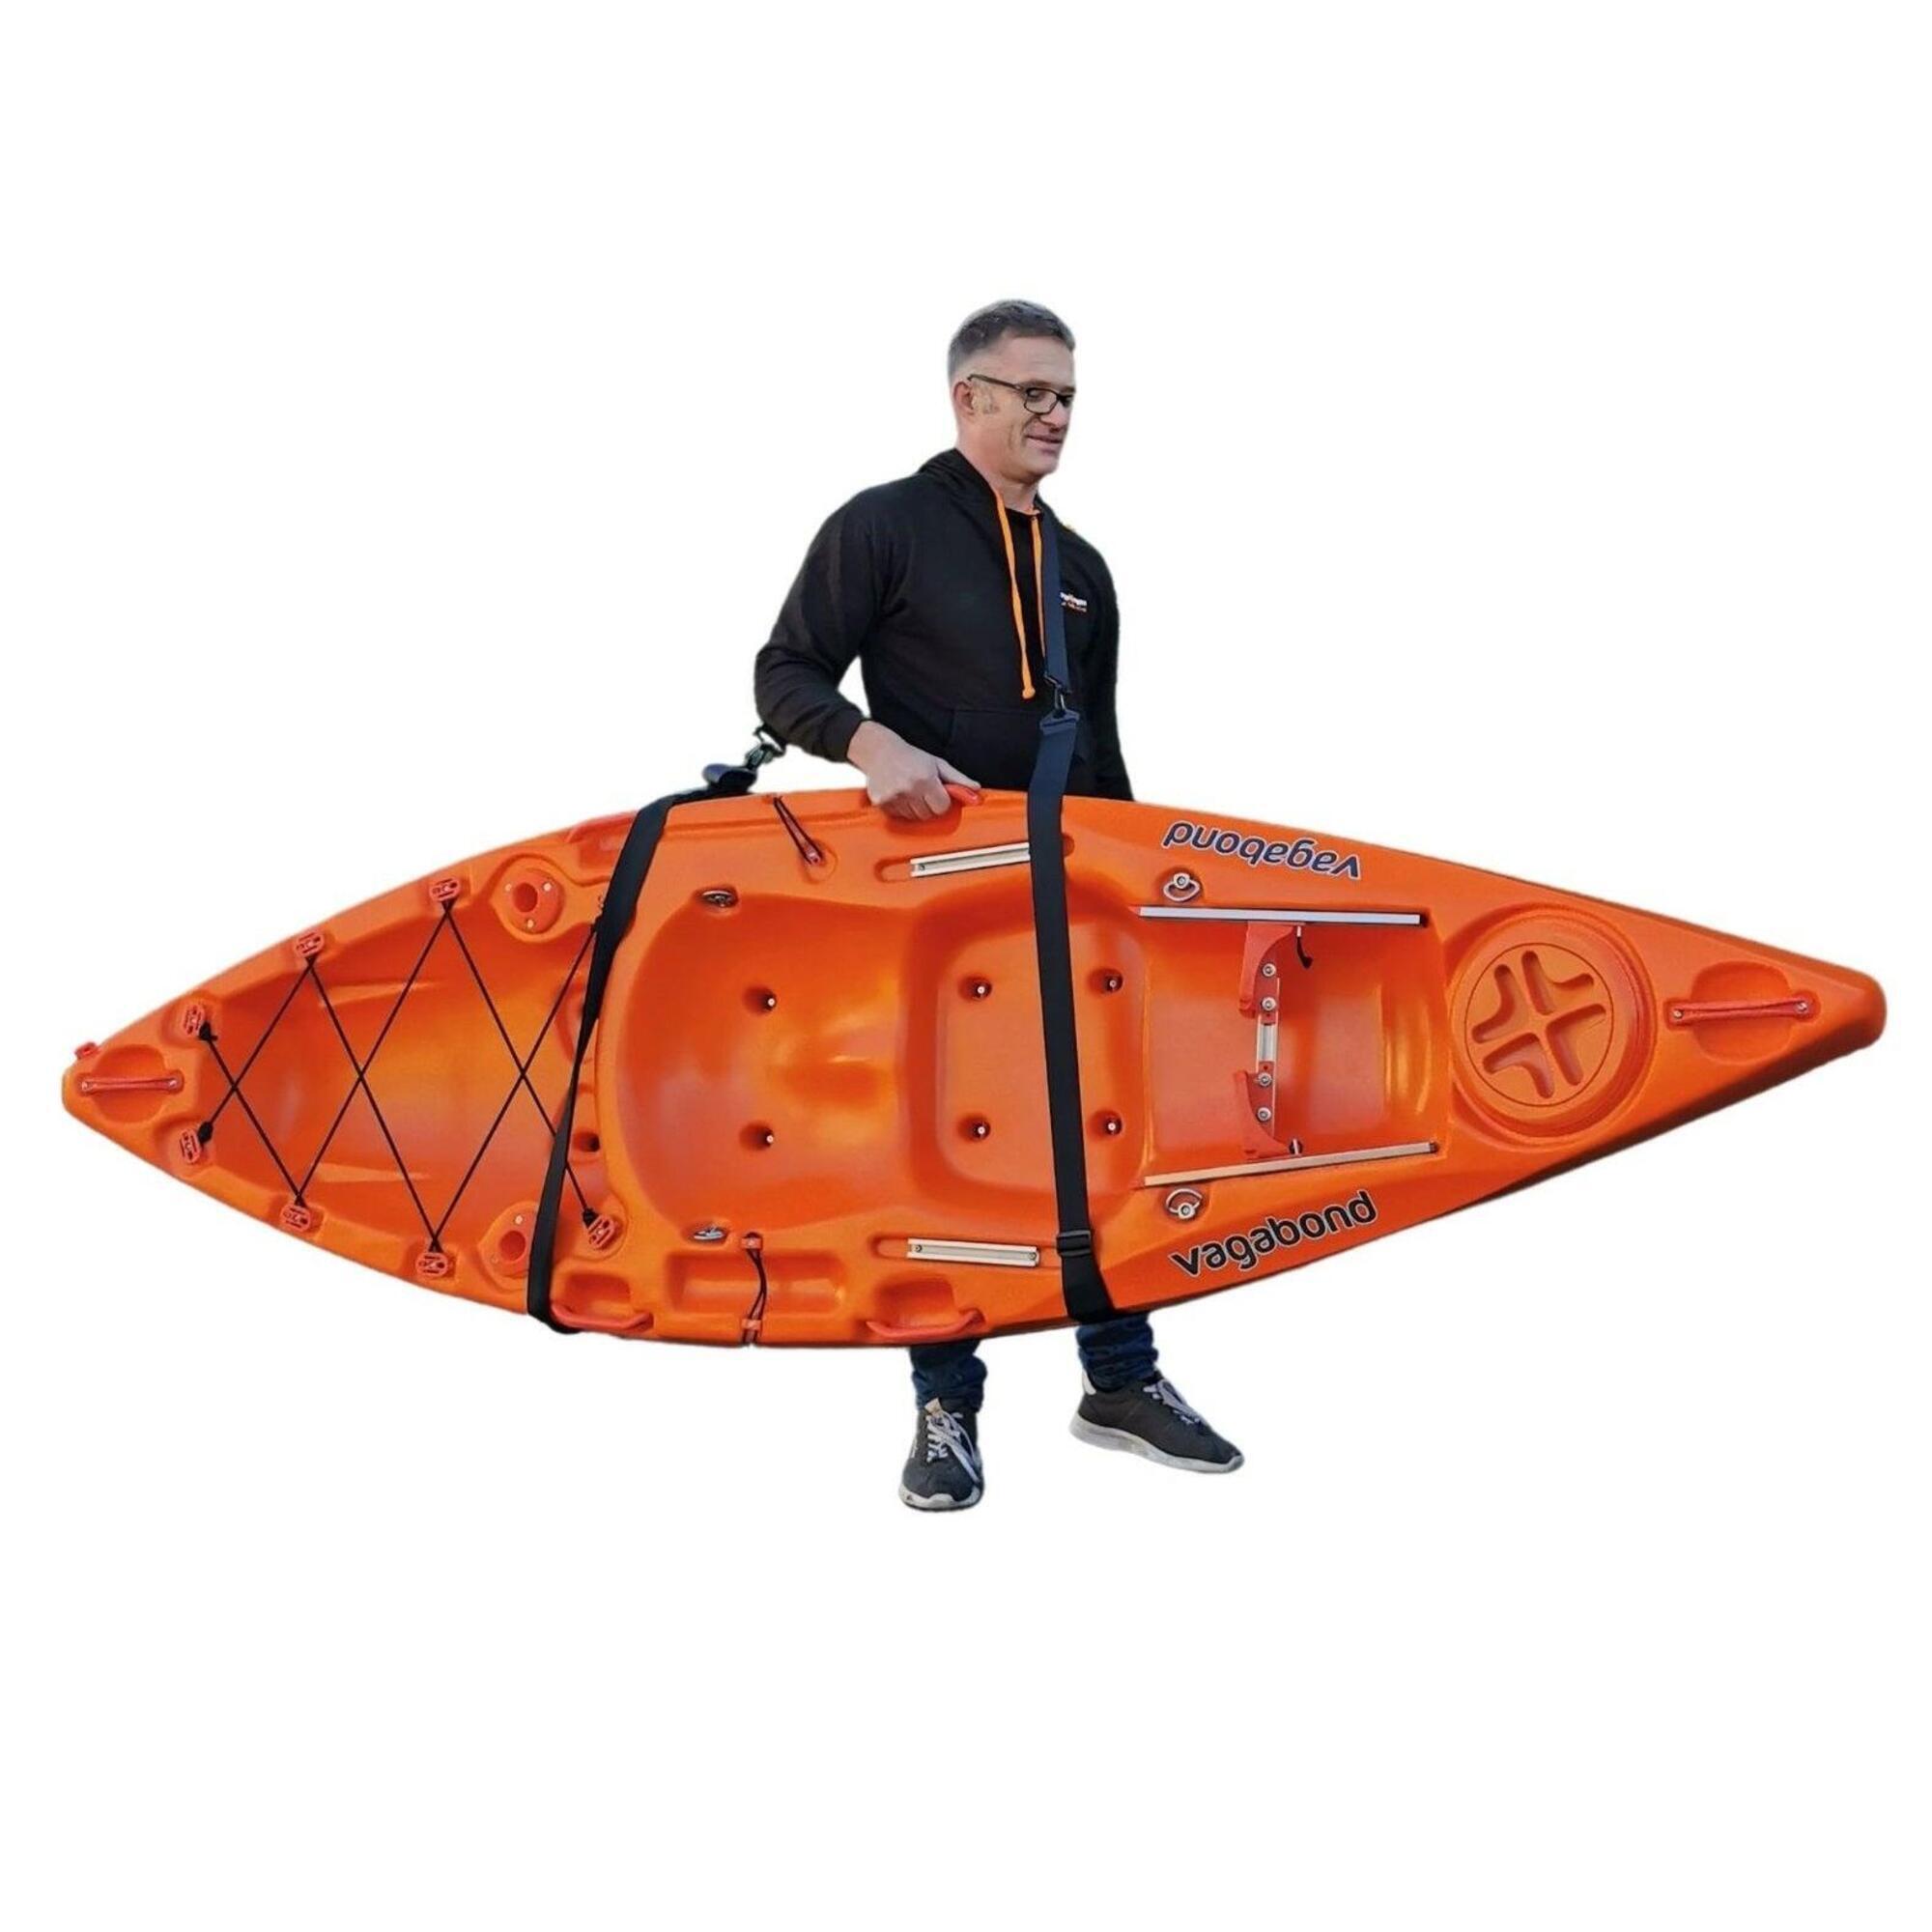 CAMBRIDGE KAYAKS Cambridge Kayaks Adjustable kayak Carry Strap